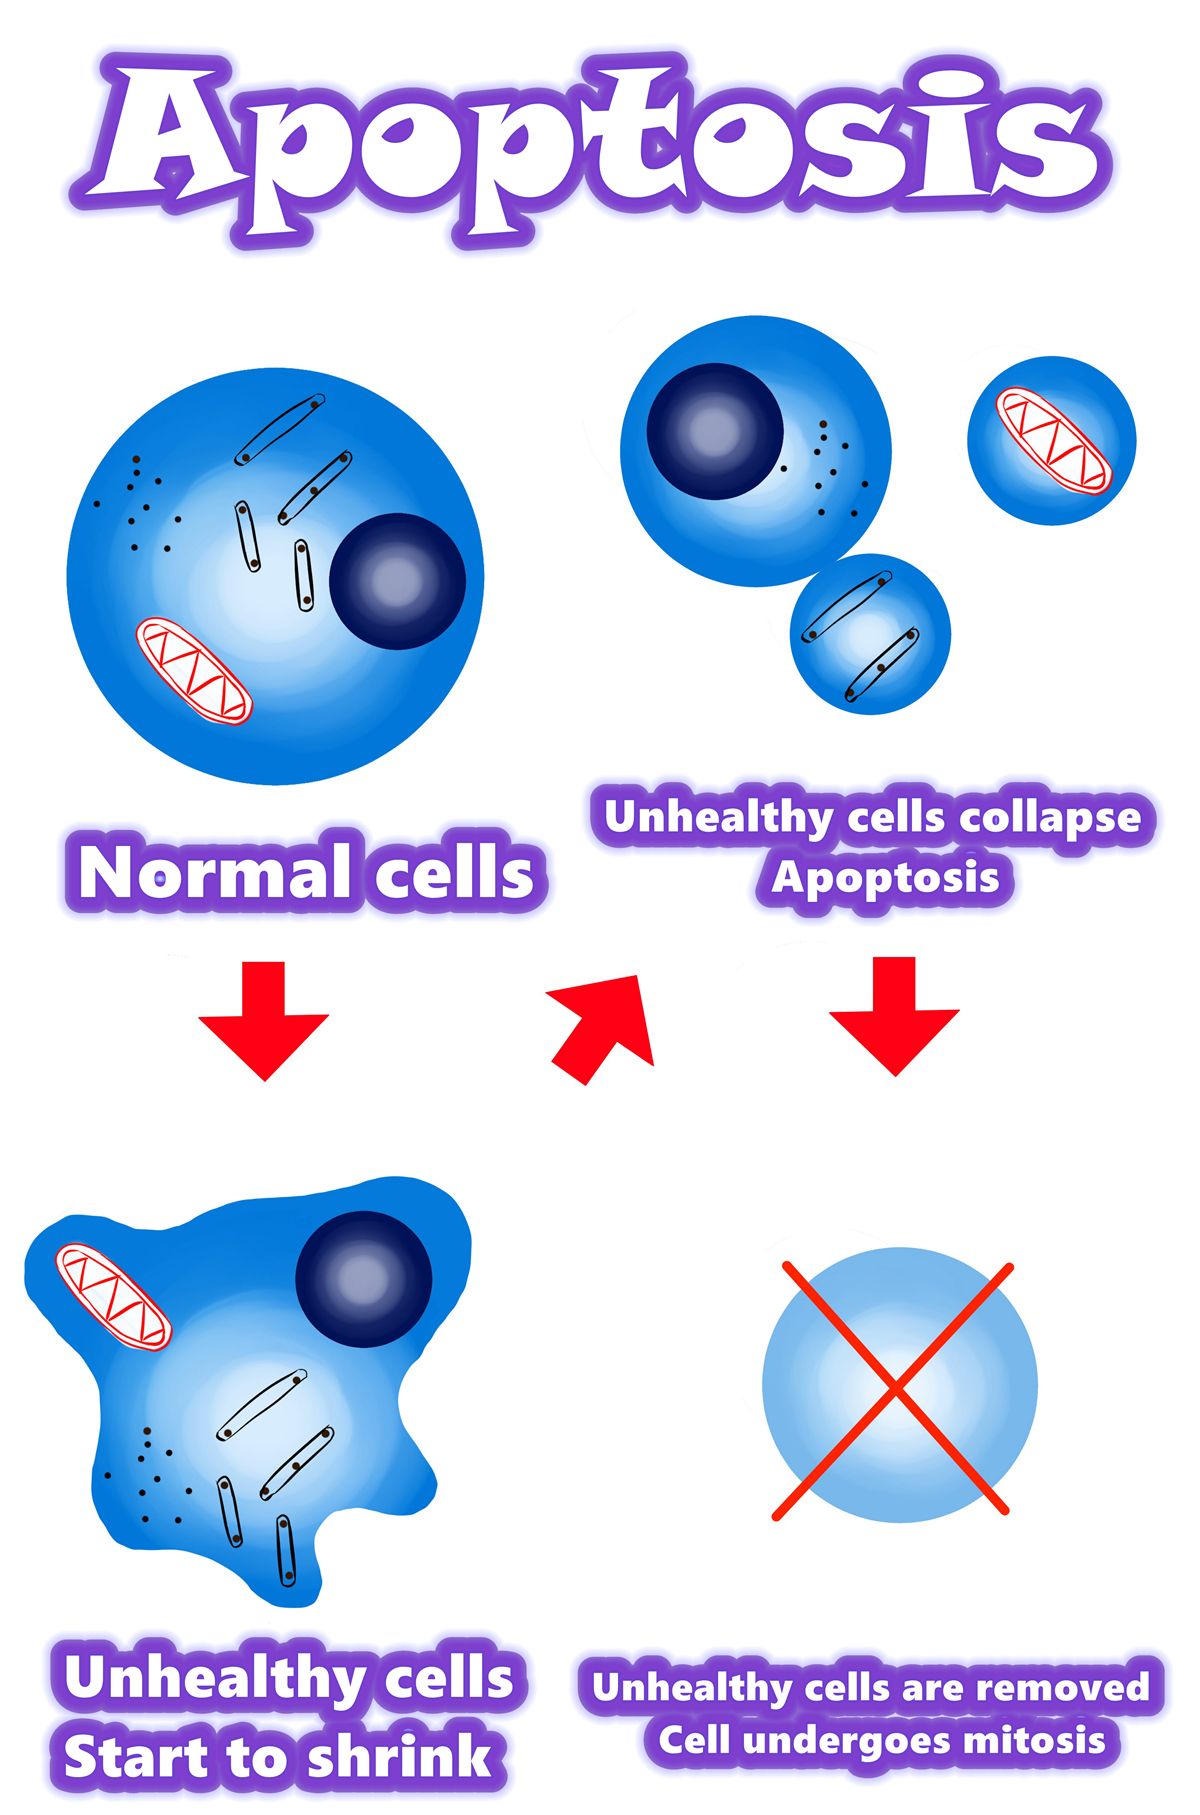 Solamargine | ทางออกที่ดีที่สุดสำหรับเซลล์มะเร็งในปี 2564 | Apoptosis vs เซลล์มะเร็ง | Apoptosis vs เซลล์ผิดปกติ | Apoptosis vs เซลล์กลายพันธุ์ | ภาพรวม / สรุป / กลไกการตายของเซลล์